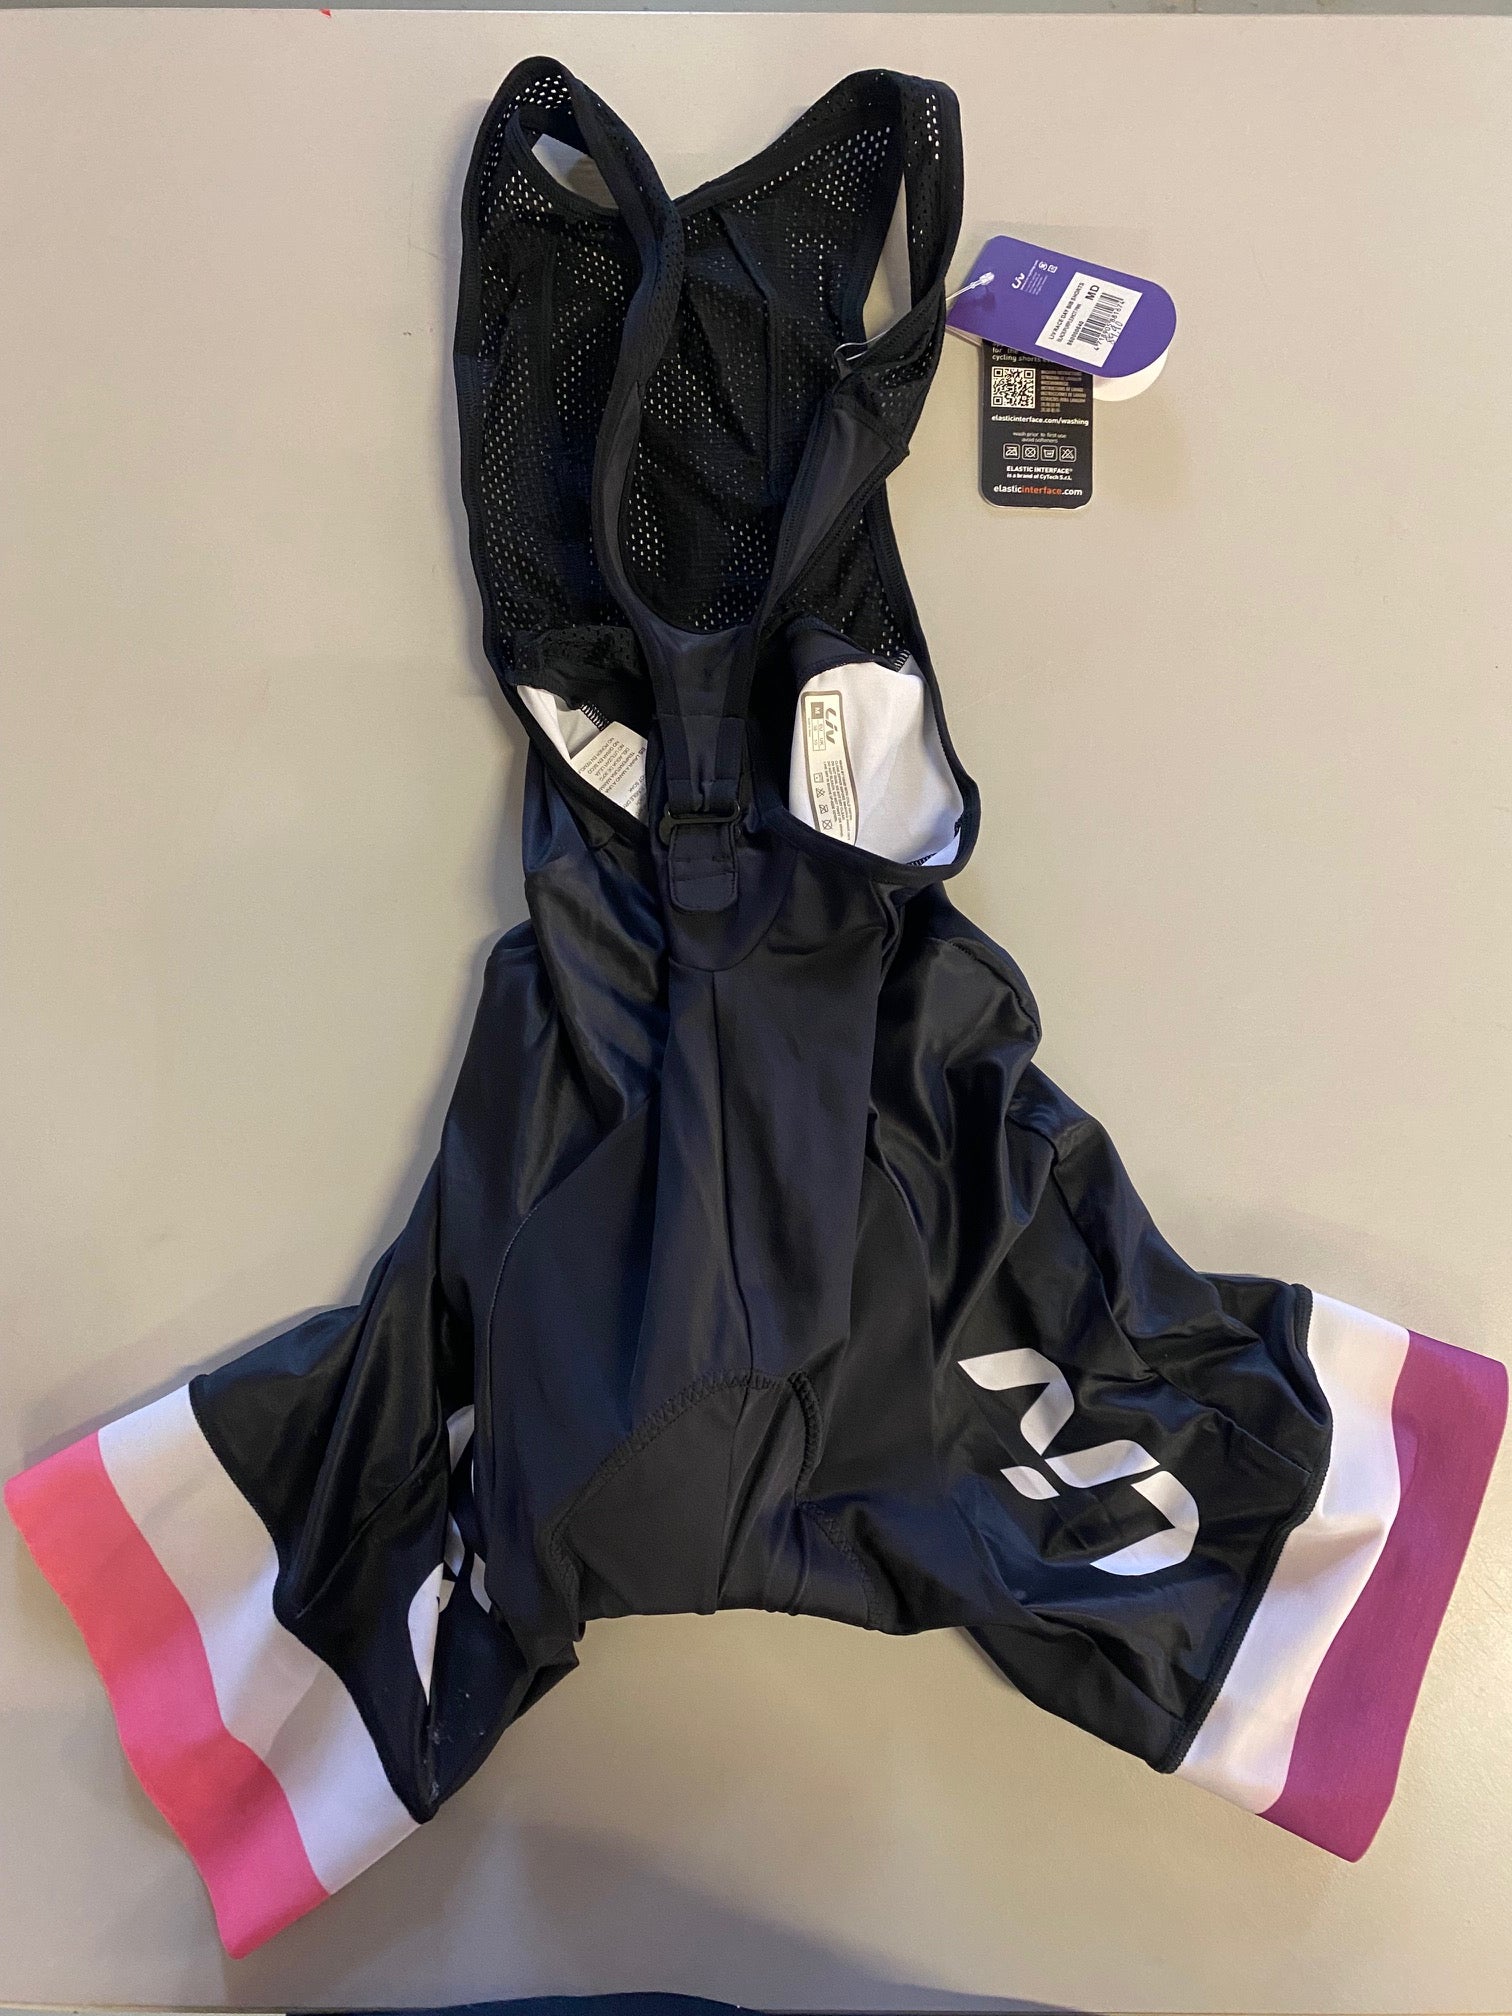 Liv Race Day Bib Shorts black/purple/hot pink size M